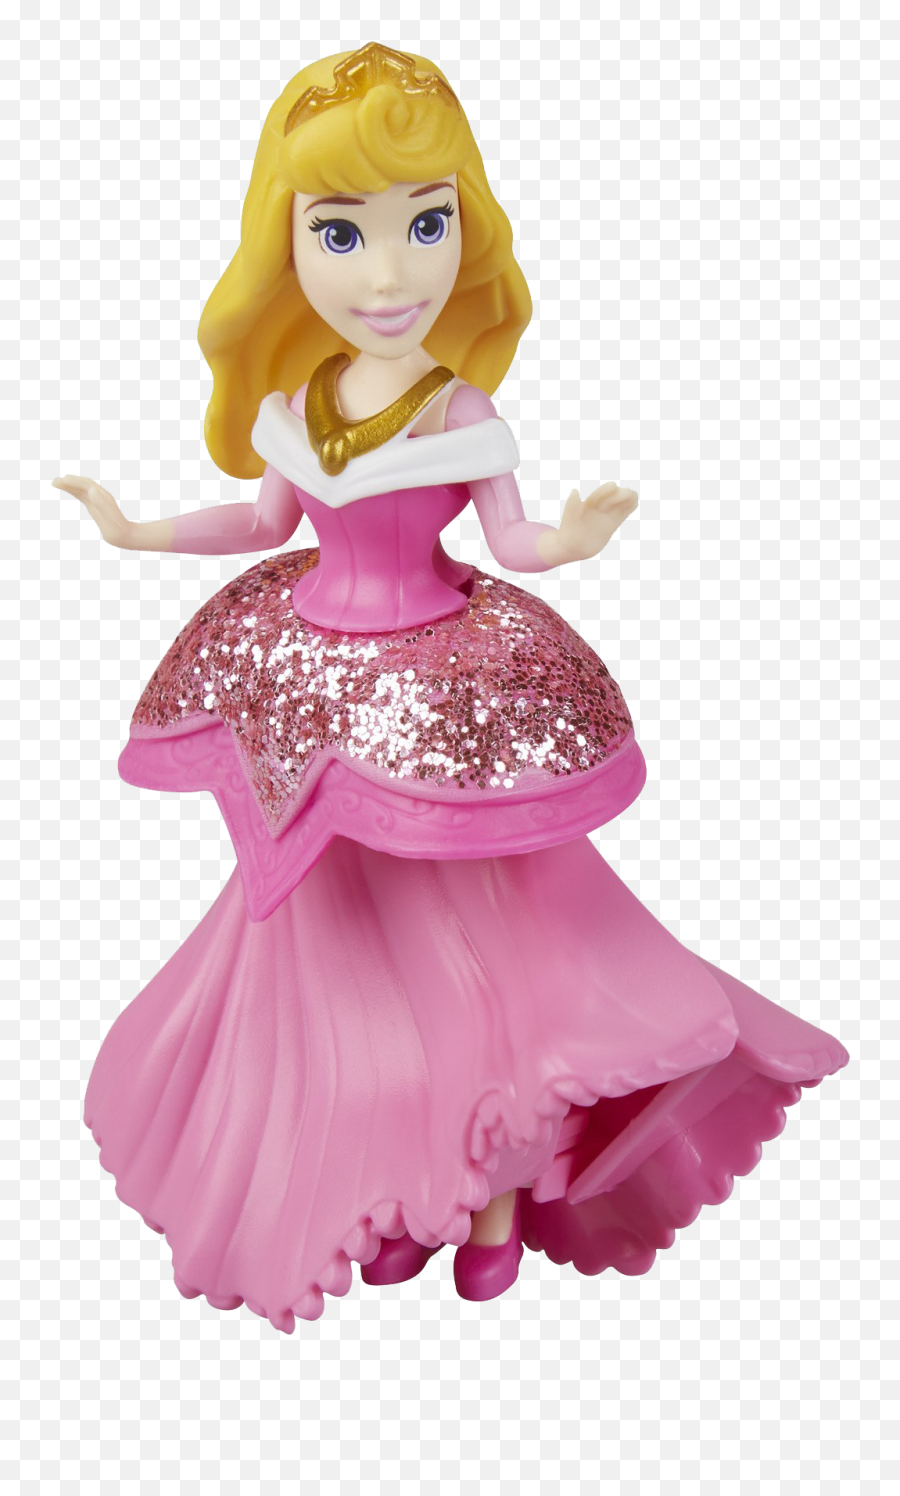 Princess Aurora Dress Png Image Arts - Princess Aurora,Aurora Png